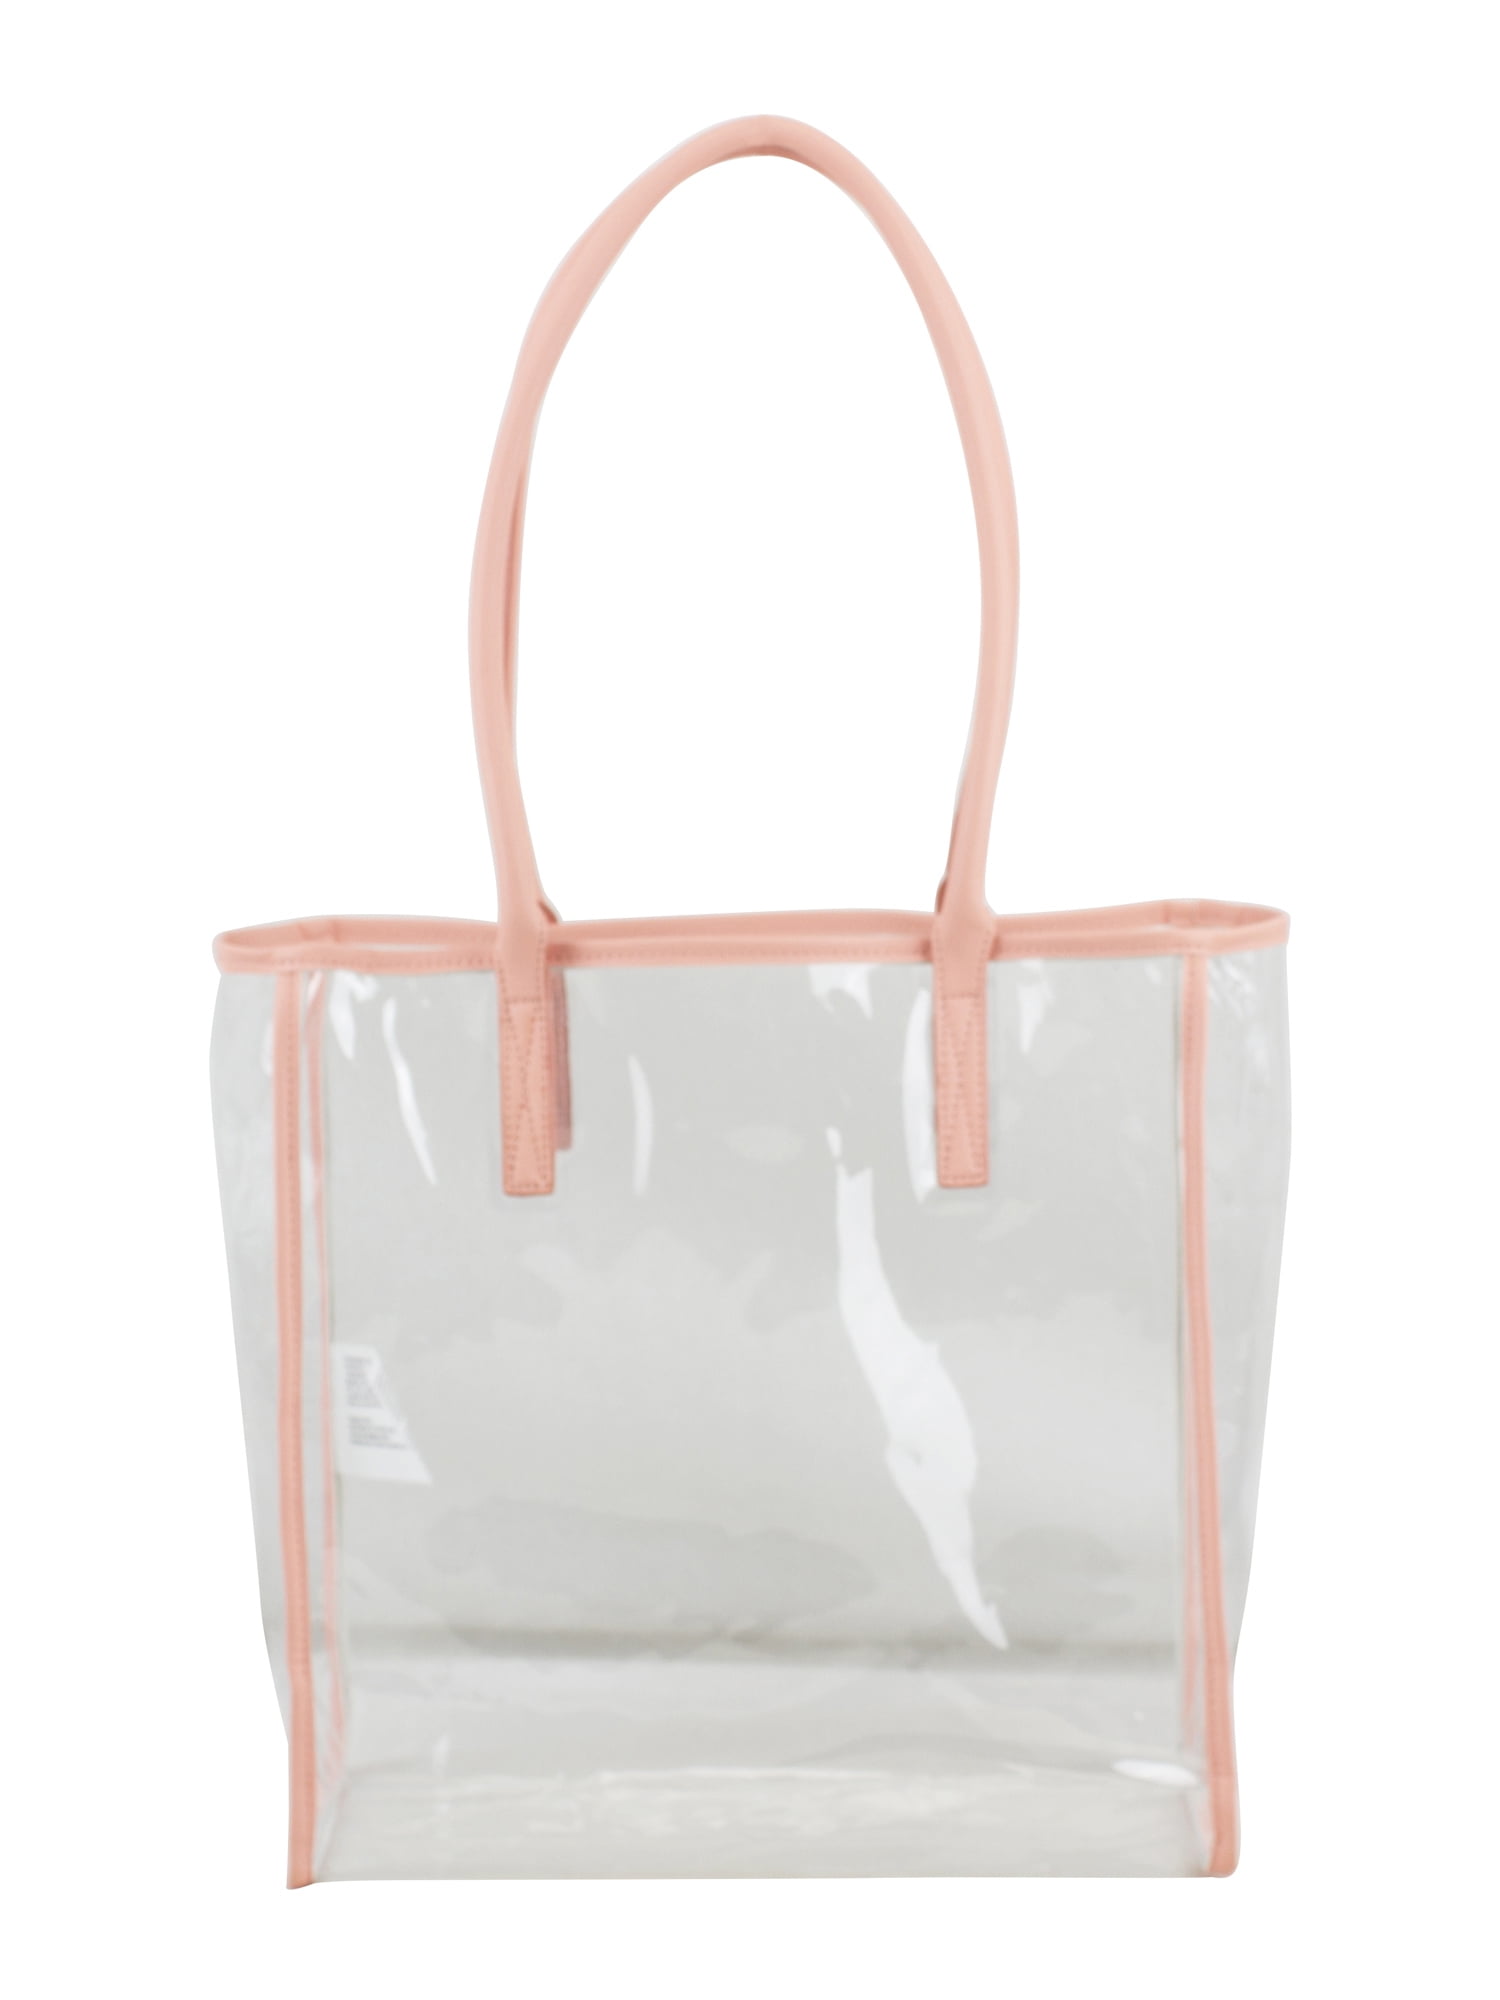 Rosegold Plain Tote Bag Women Small Shoulder Bag Faux Leather Designer Beach Bag 